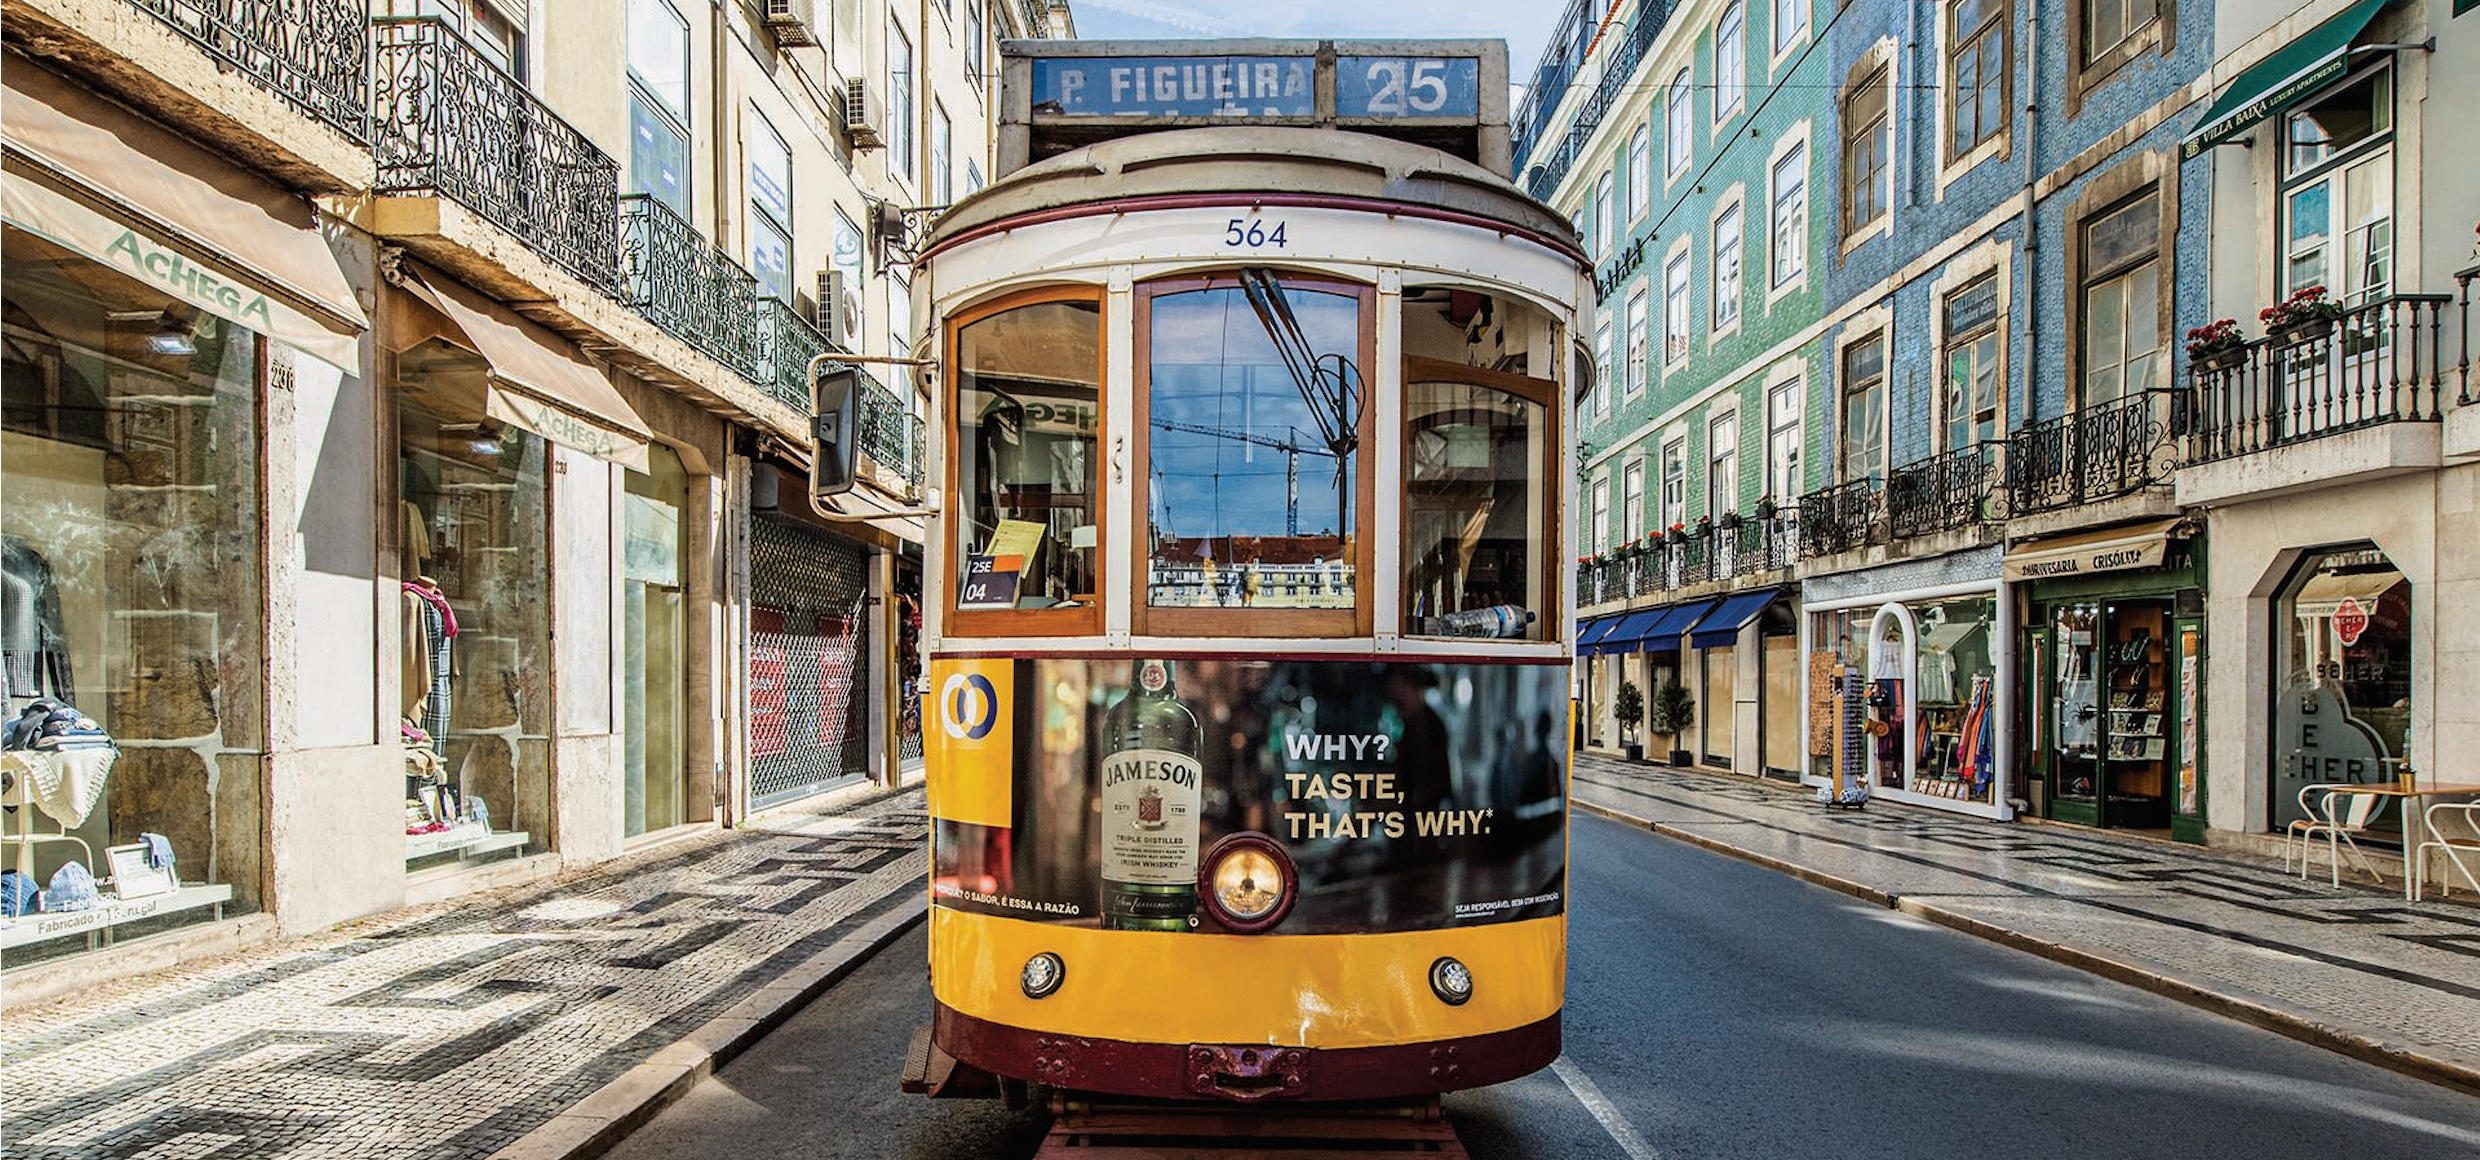 Portugal_Lissabon